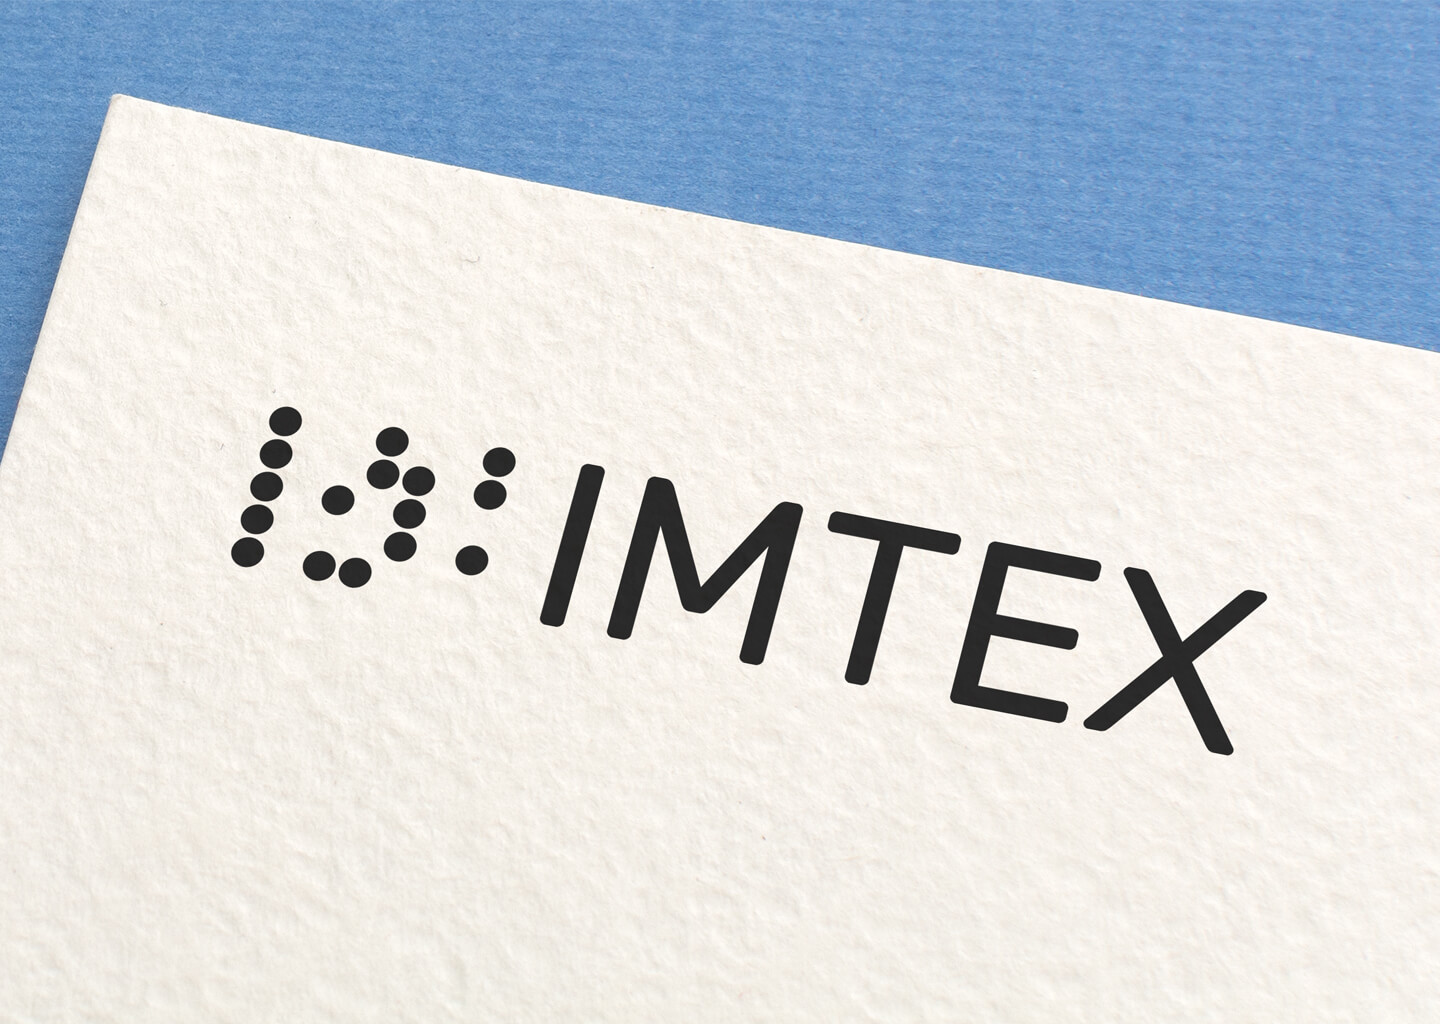 Imtex-logo-02